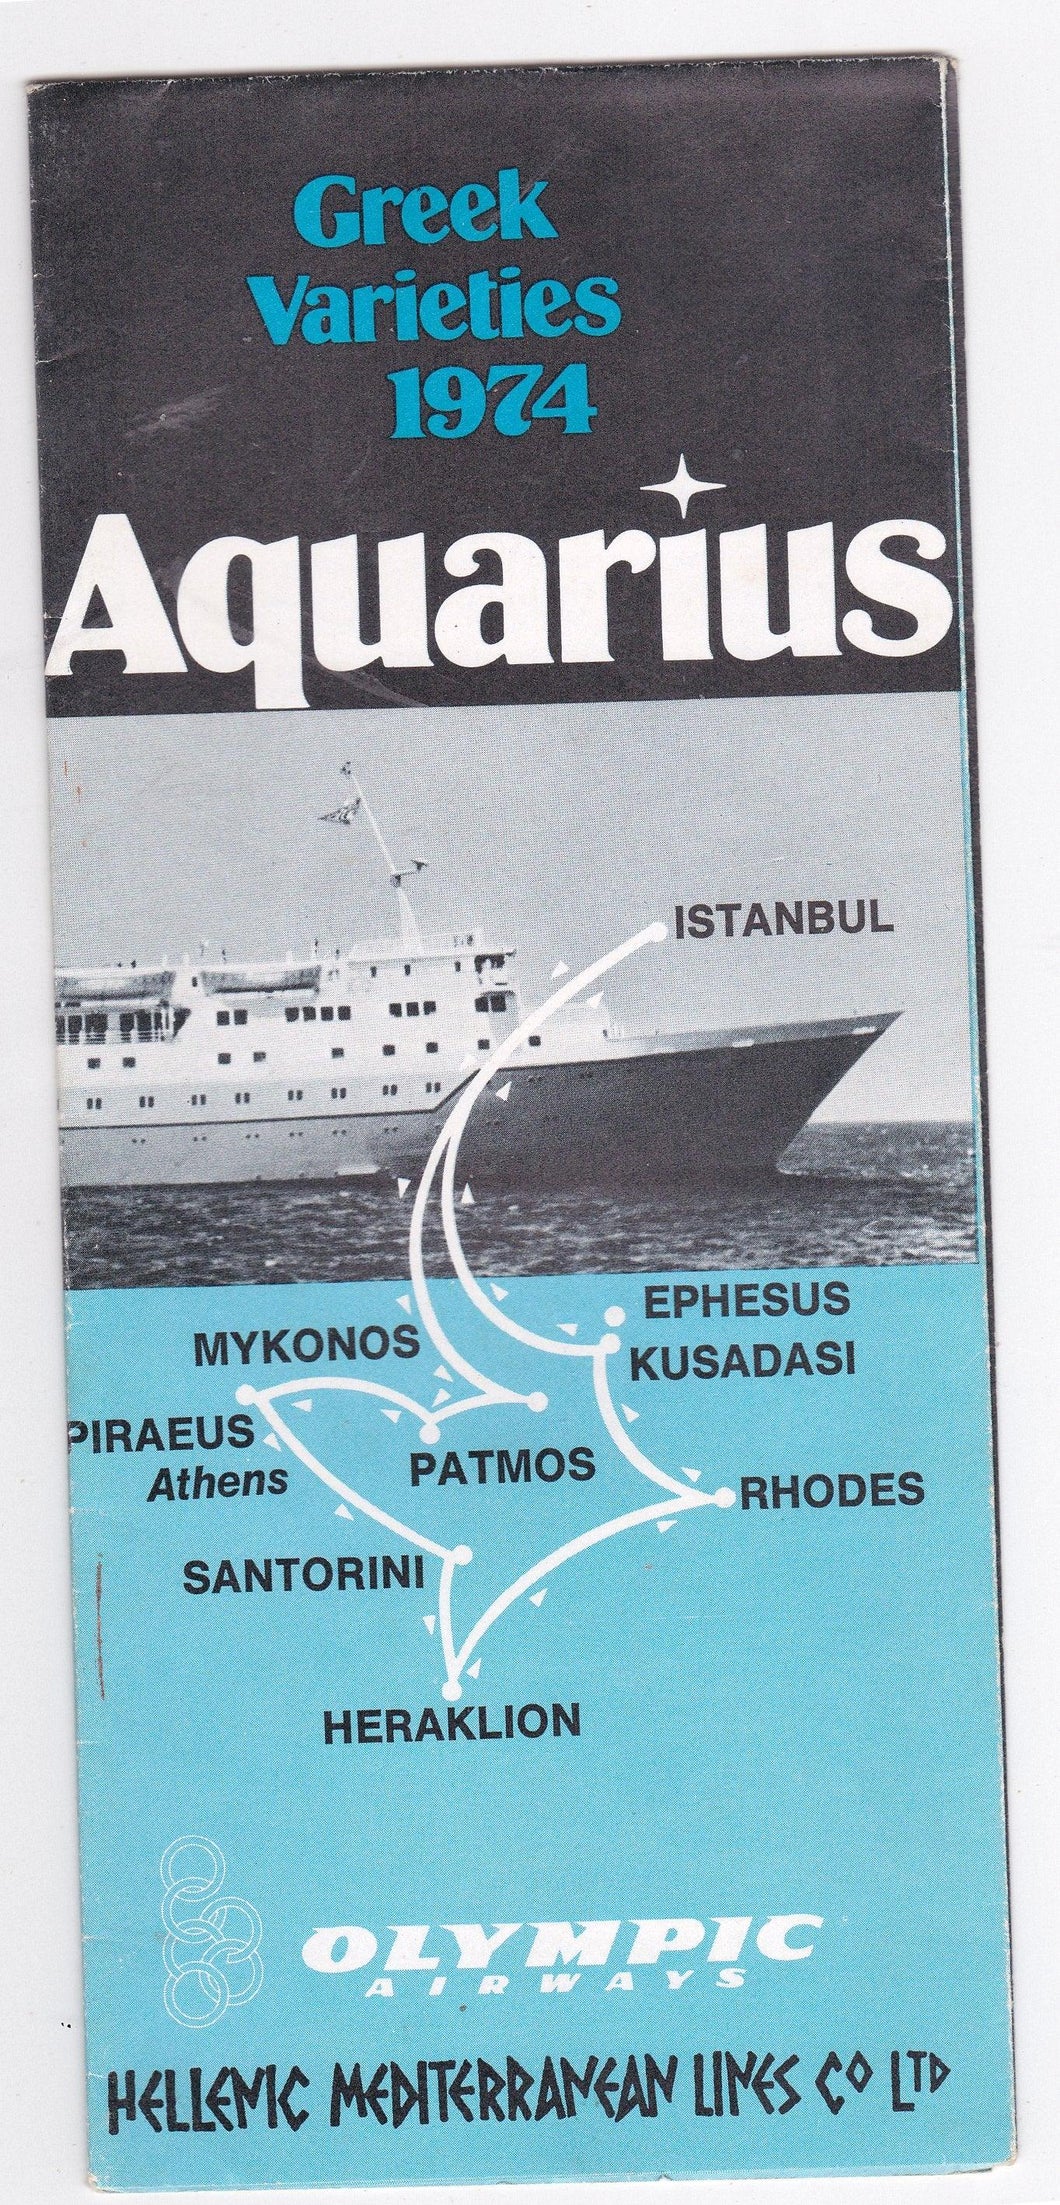 Hellenic Mediterranean Lines ms Aquarius Greek Islands Cruise Brochure - TulipStuff